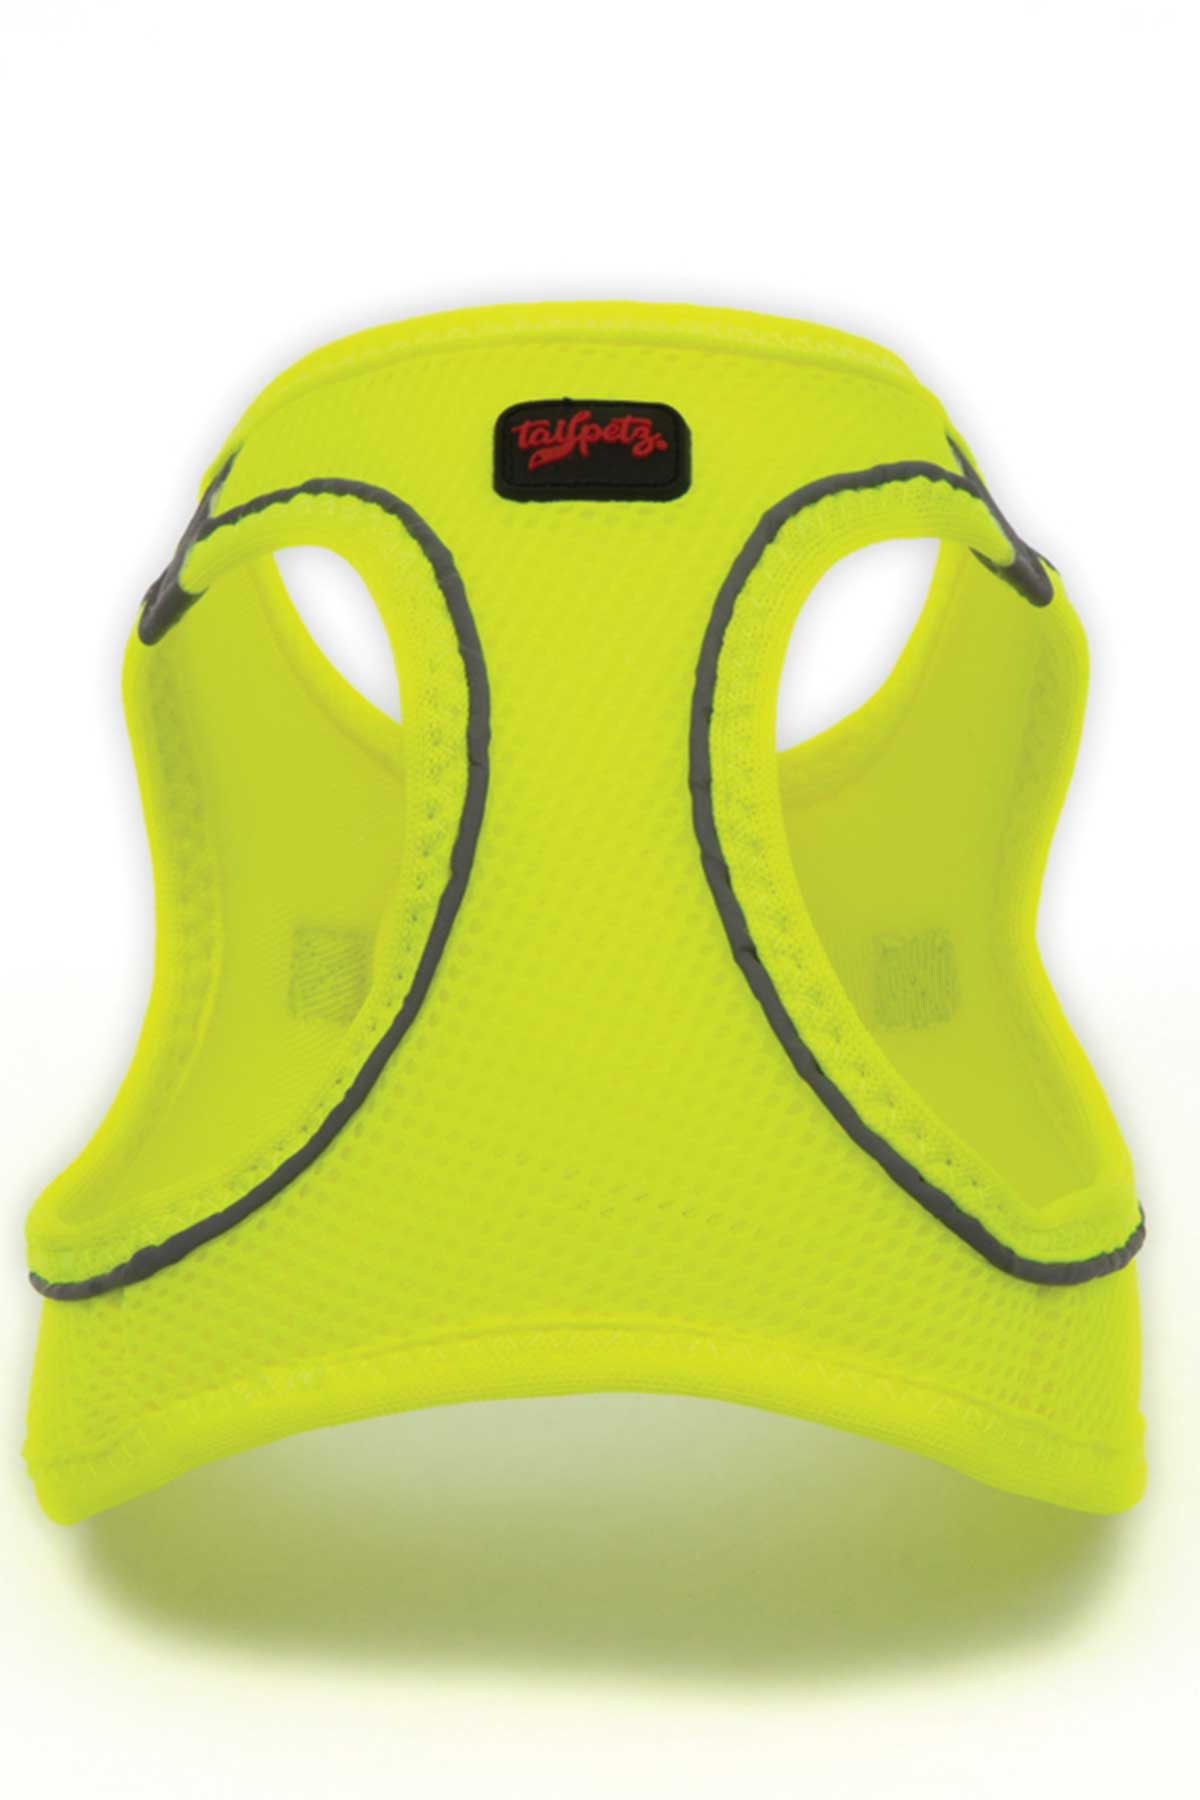 Tailpetz Air Mesh Harness Neon Lime Köpek Göğüs Tasması 3XS